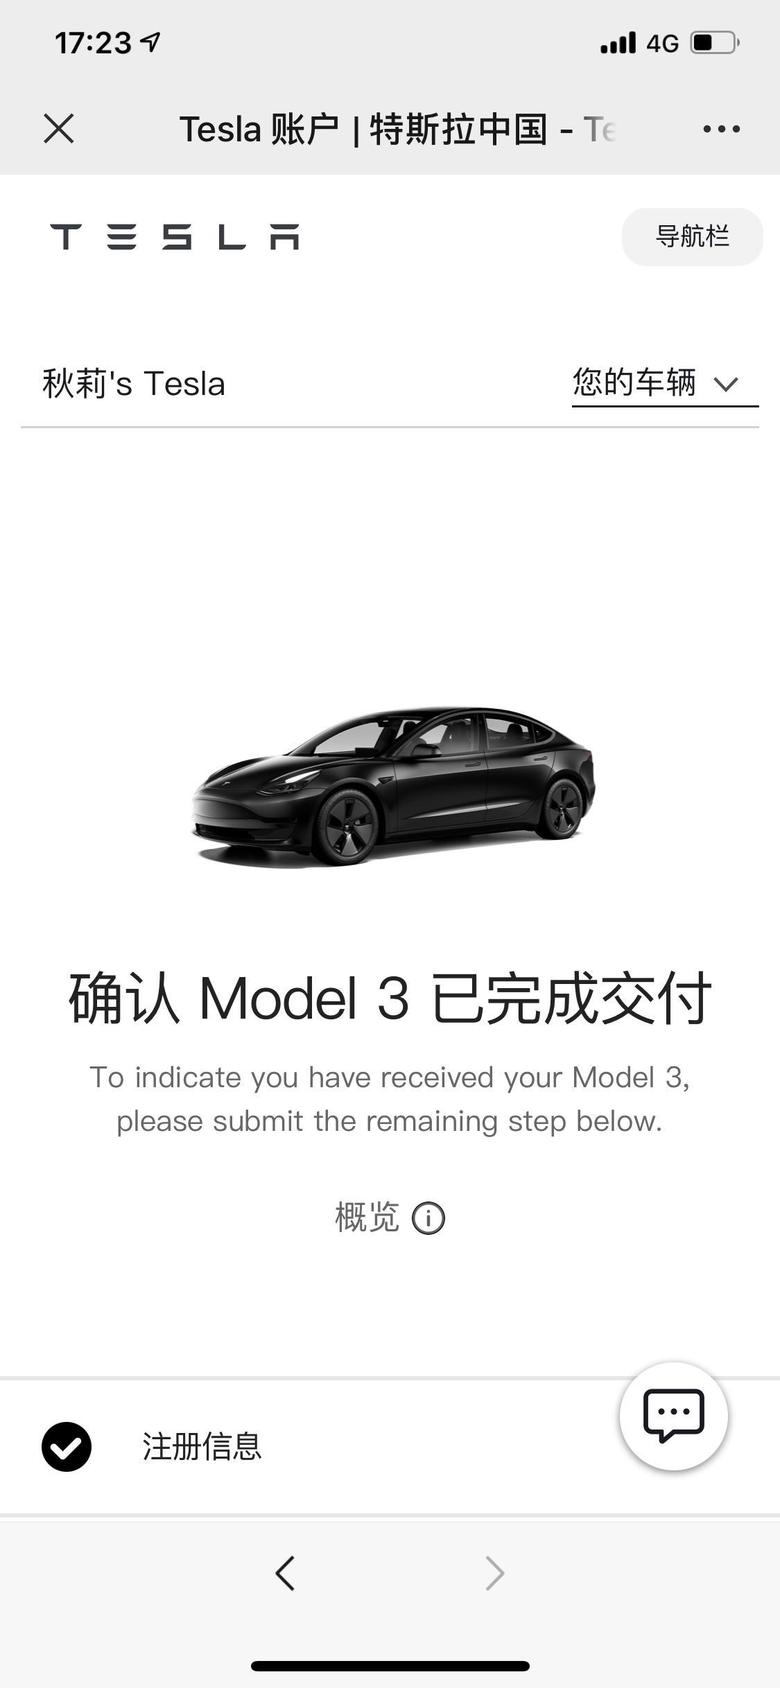 model 3 坐标杭州10 11号下定订单号200今天收到交付中心电话让后天提车